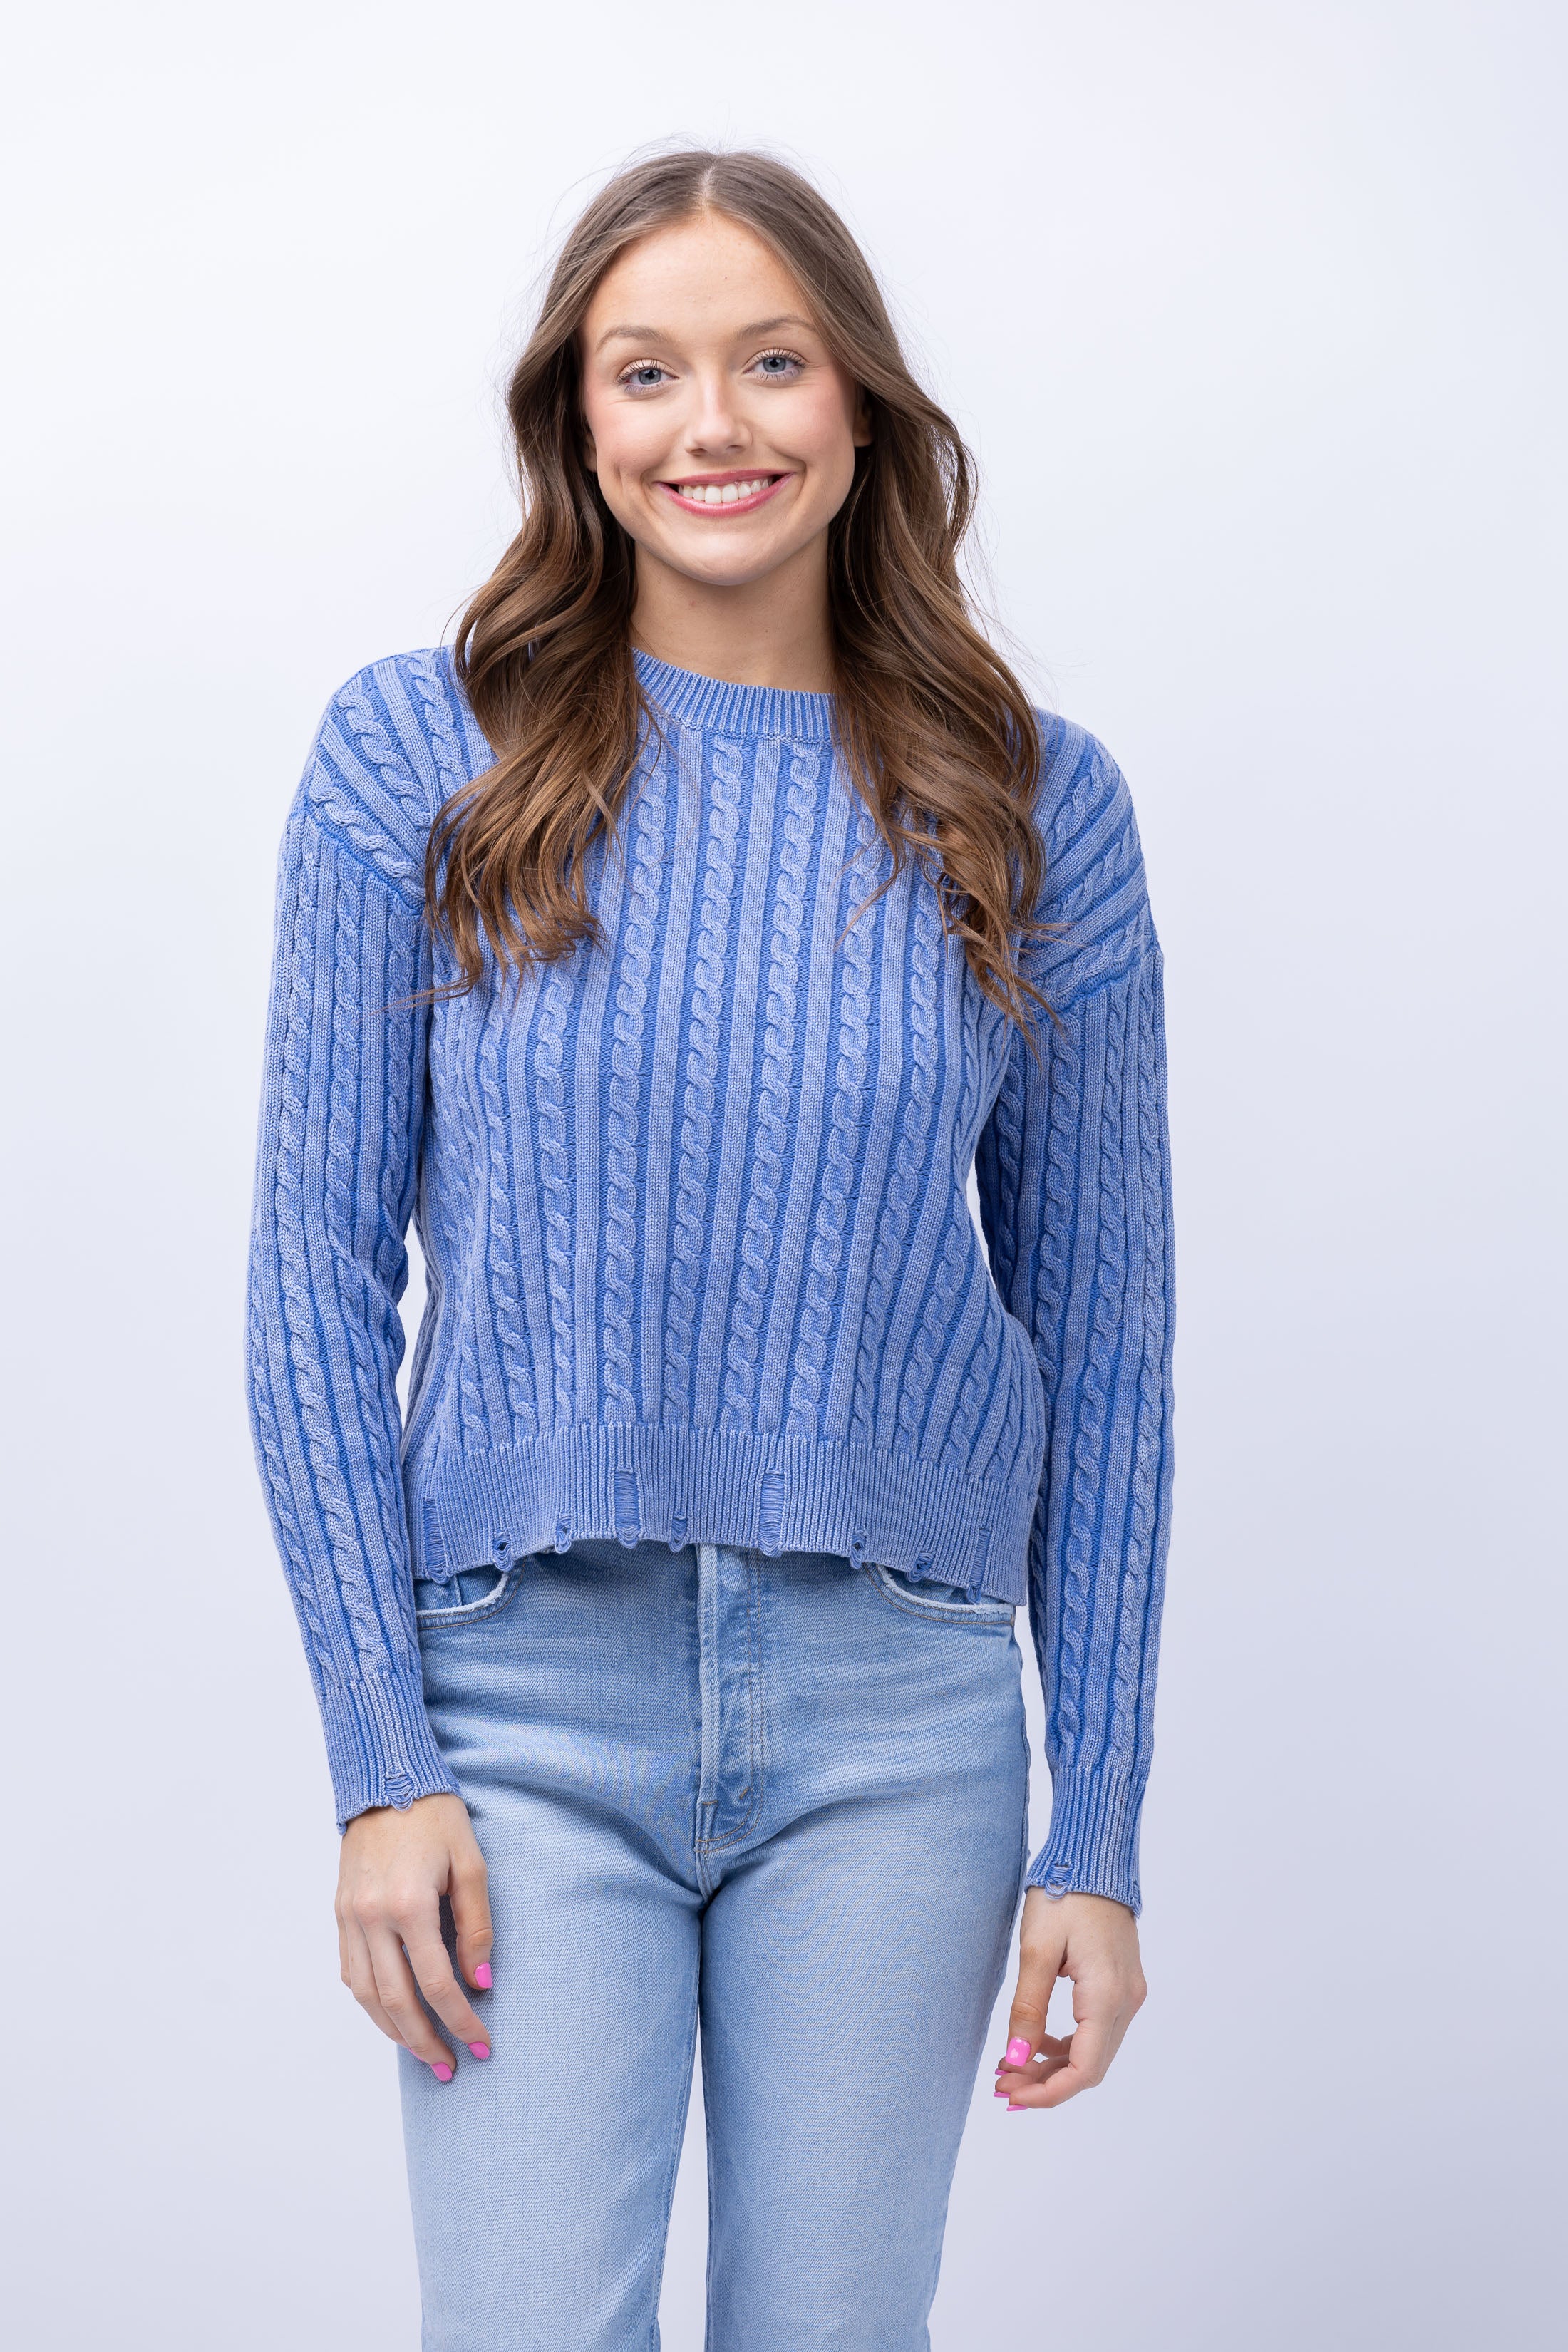 Elliott Lauren Sweater in Denim – CoatTails